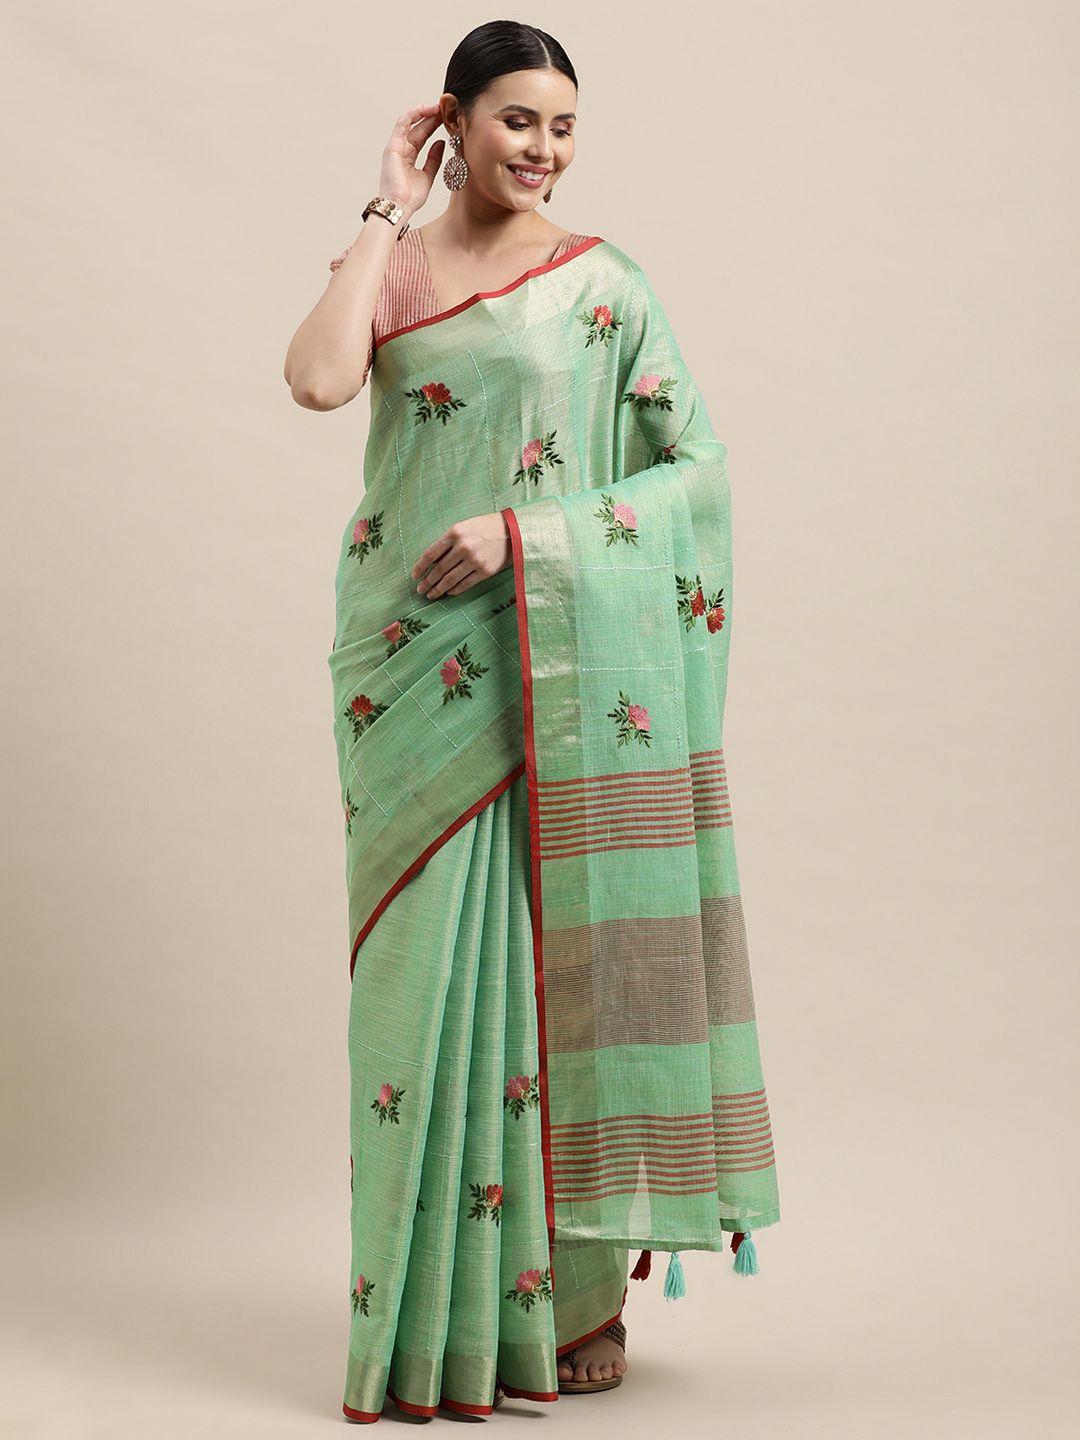 sangam prints green & maroon ethnic embroidered linen blend saree